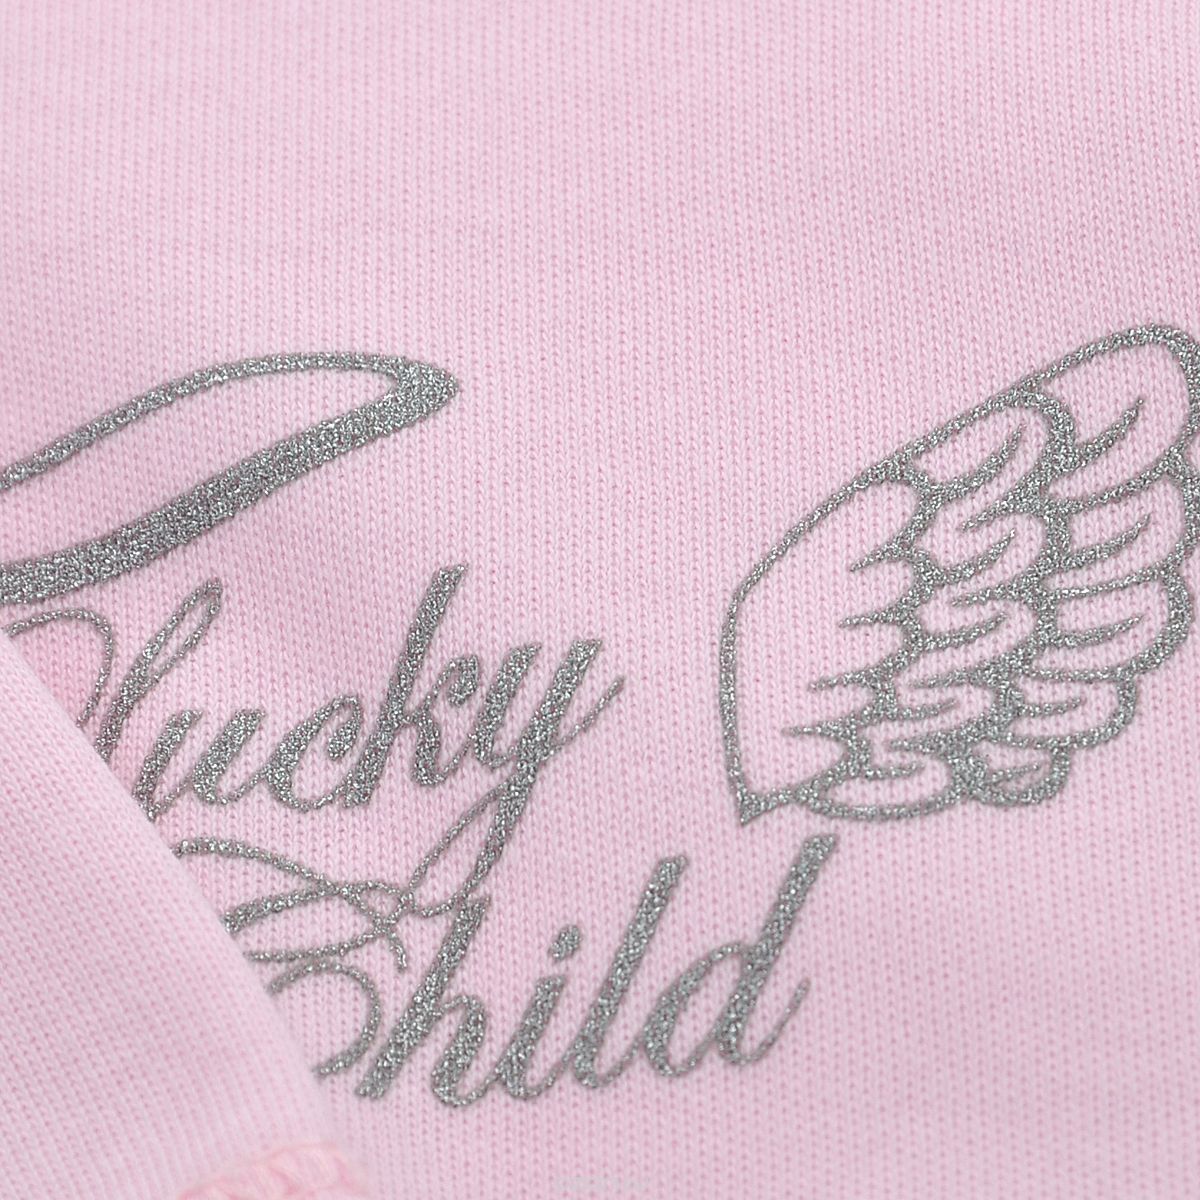   Lucky Child , : . 17-1.  56/62